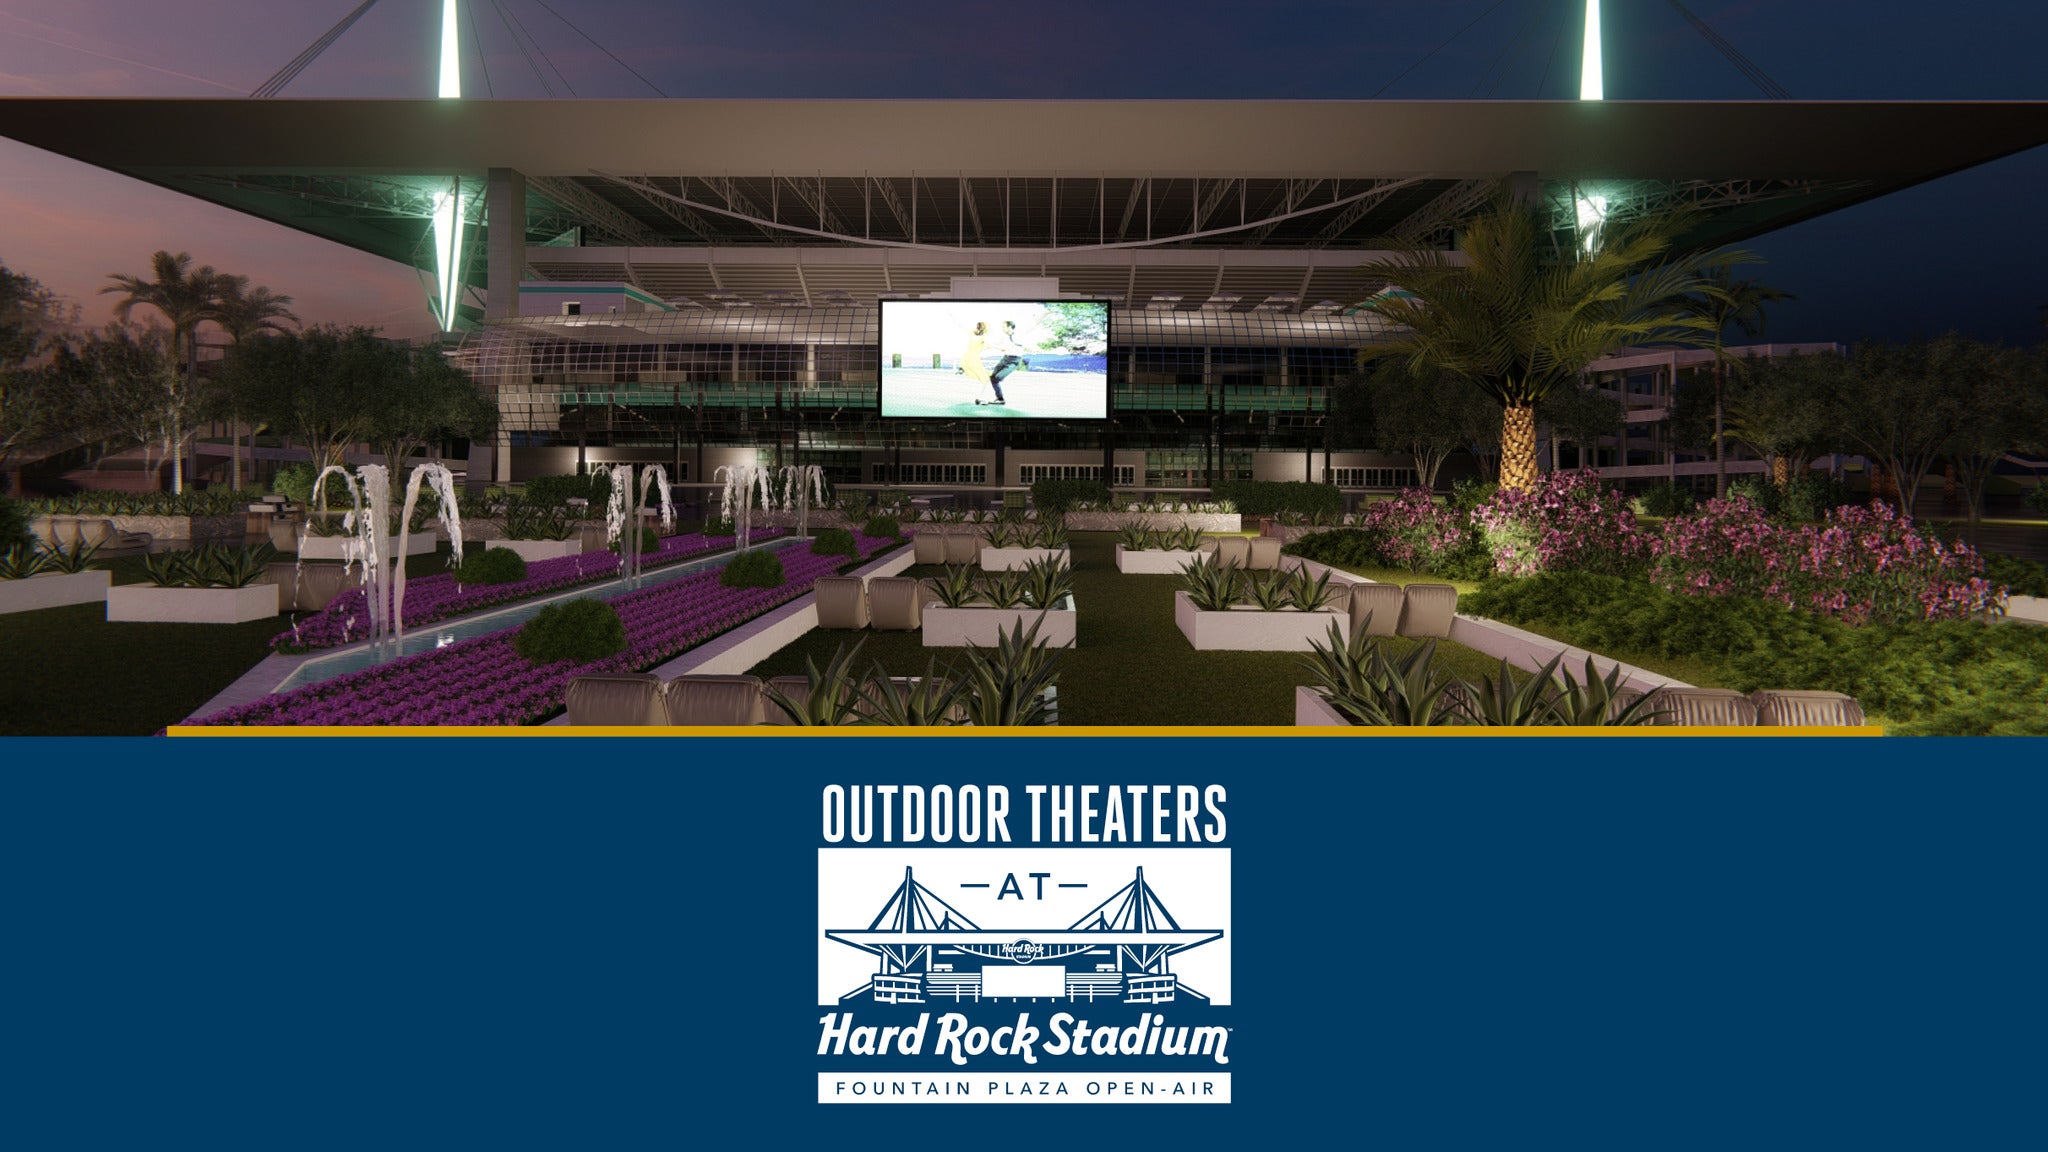 Fountain Plaza Theater: Jumanji Next Level in Miami promo photo for Hard Rock Stadium Members presale offer code